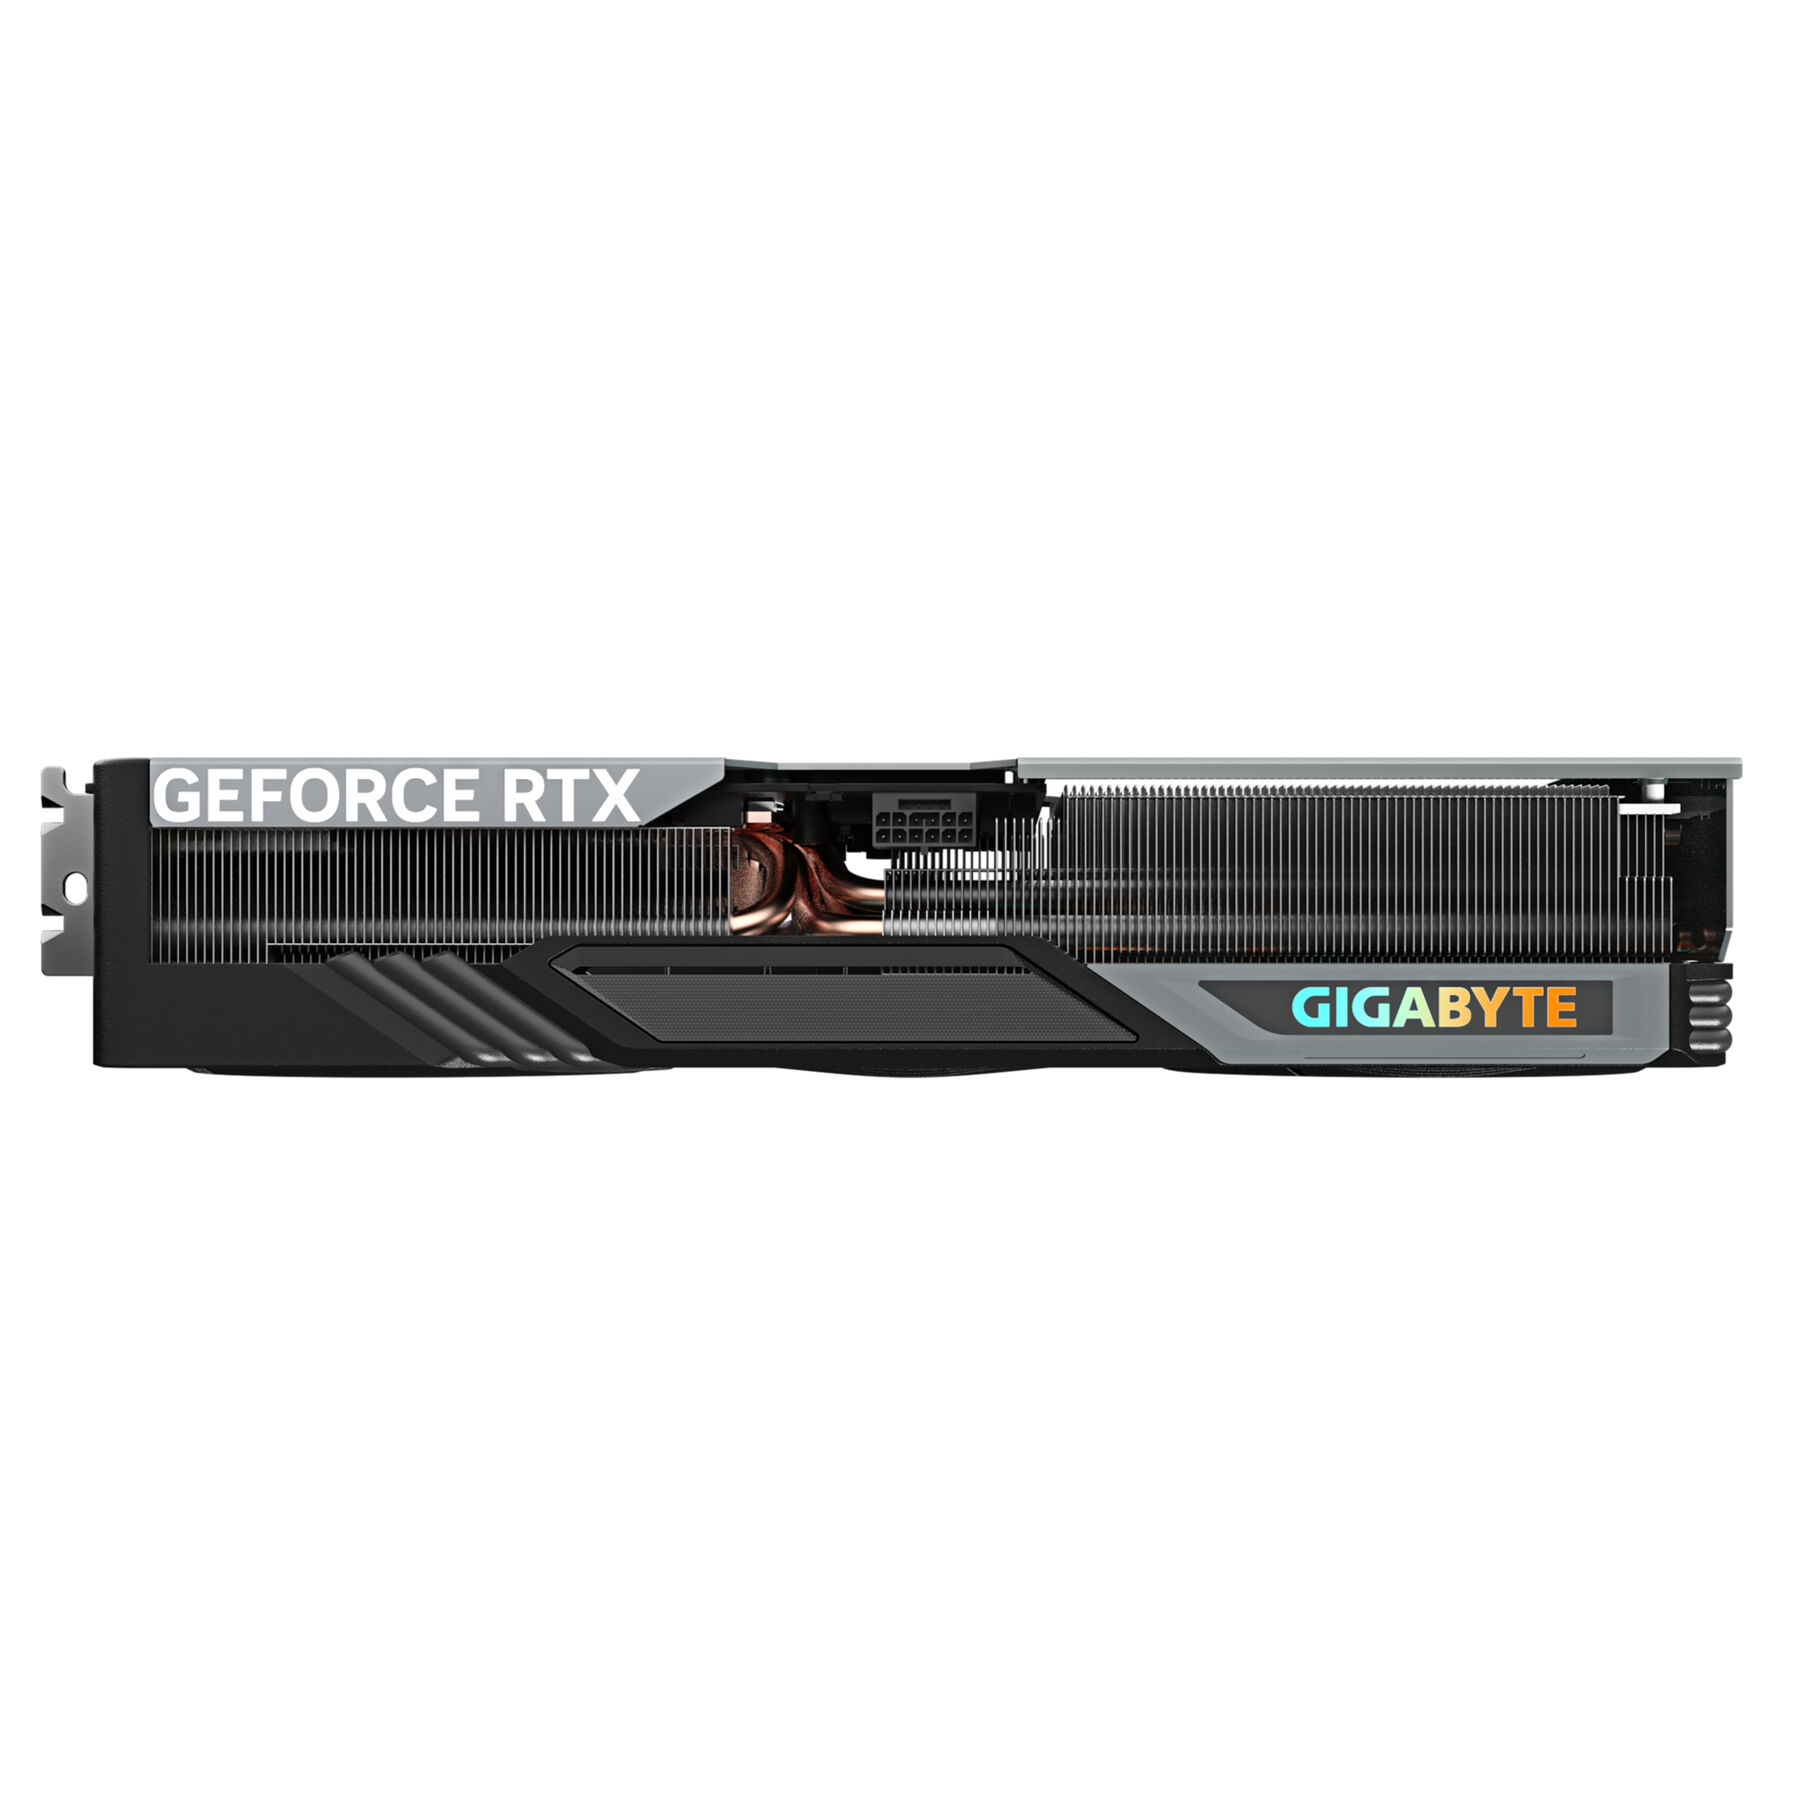 GIGABYTE GeForce RTX 4070 (NVIDIA, GAMING OC SUPER Ti Grafikkarte) 16G